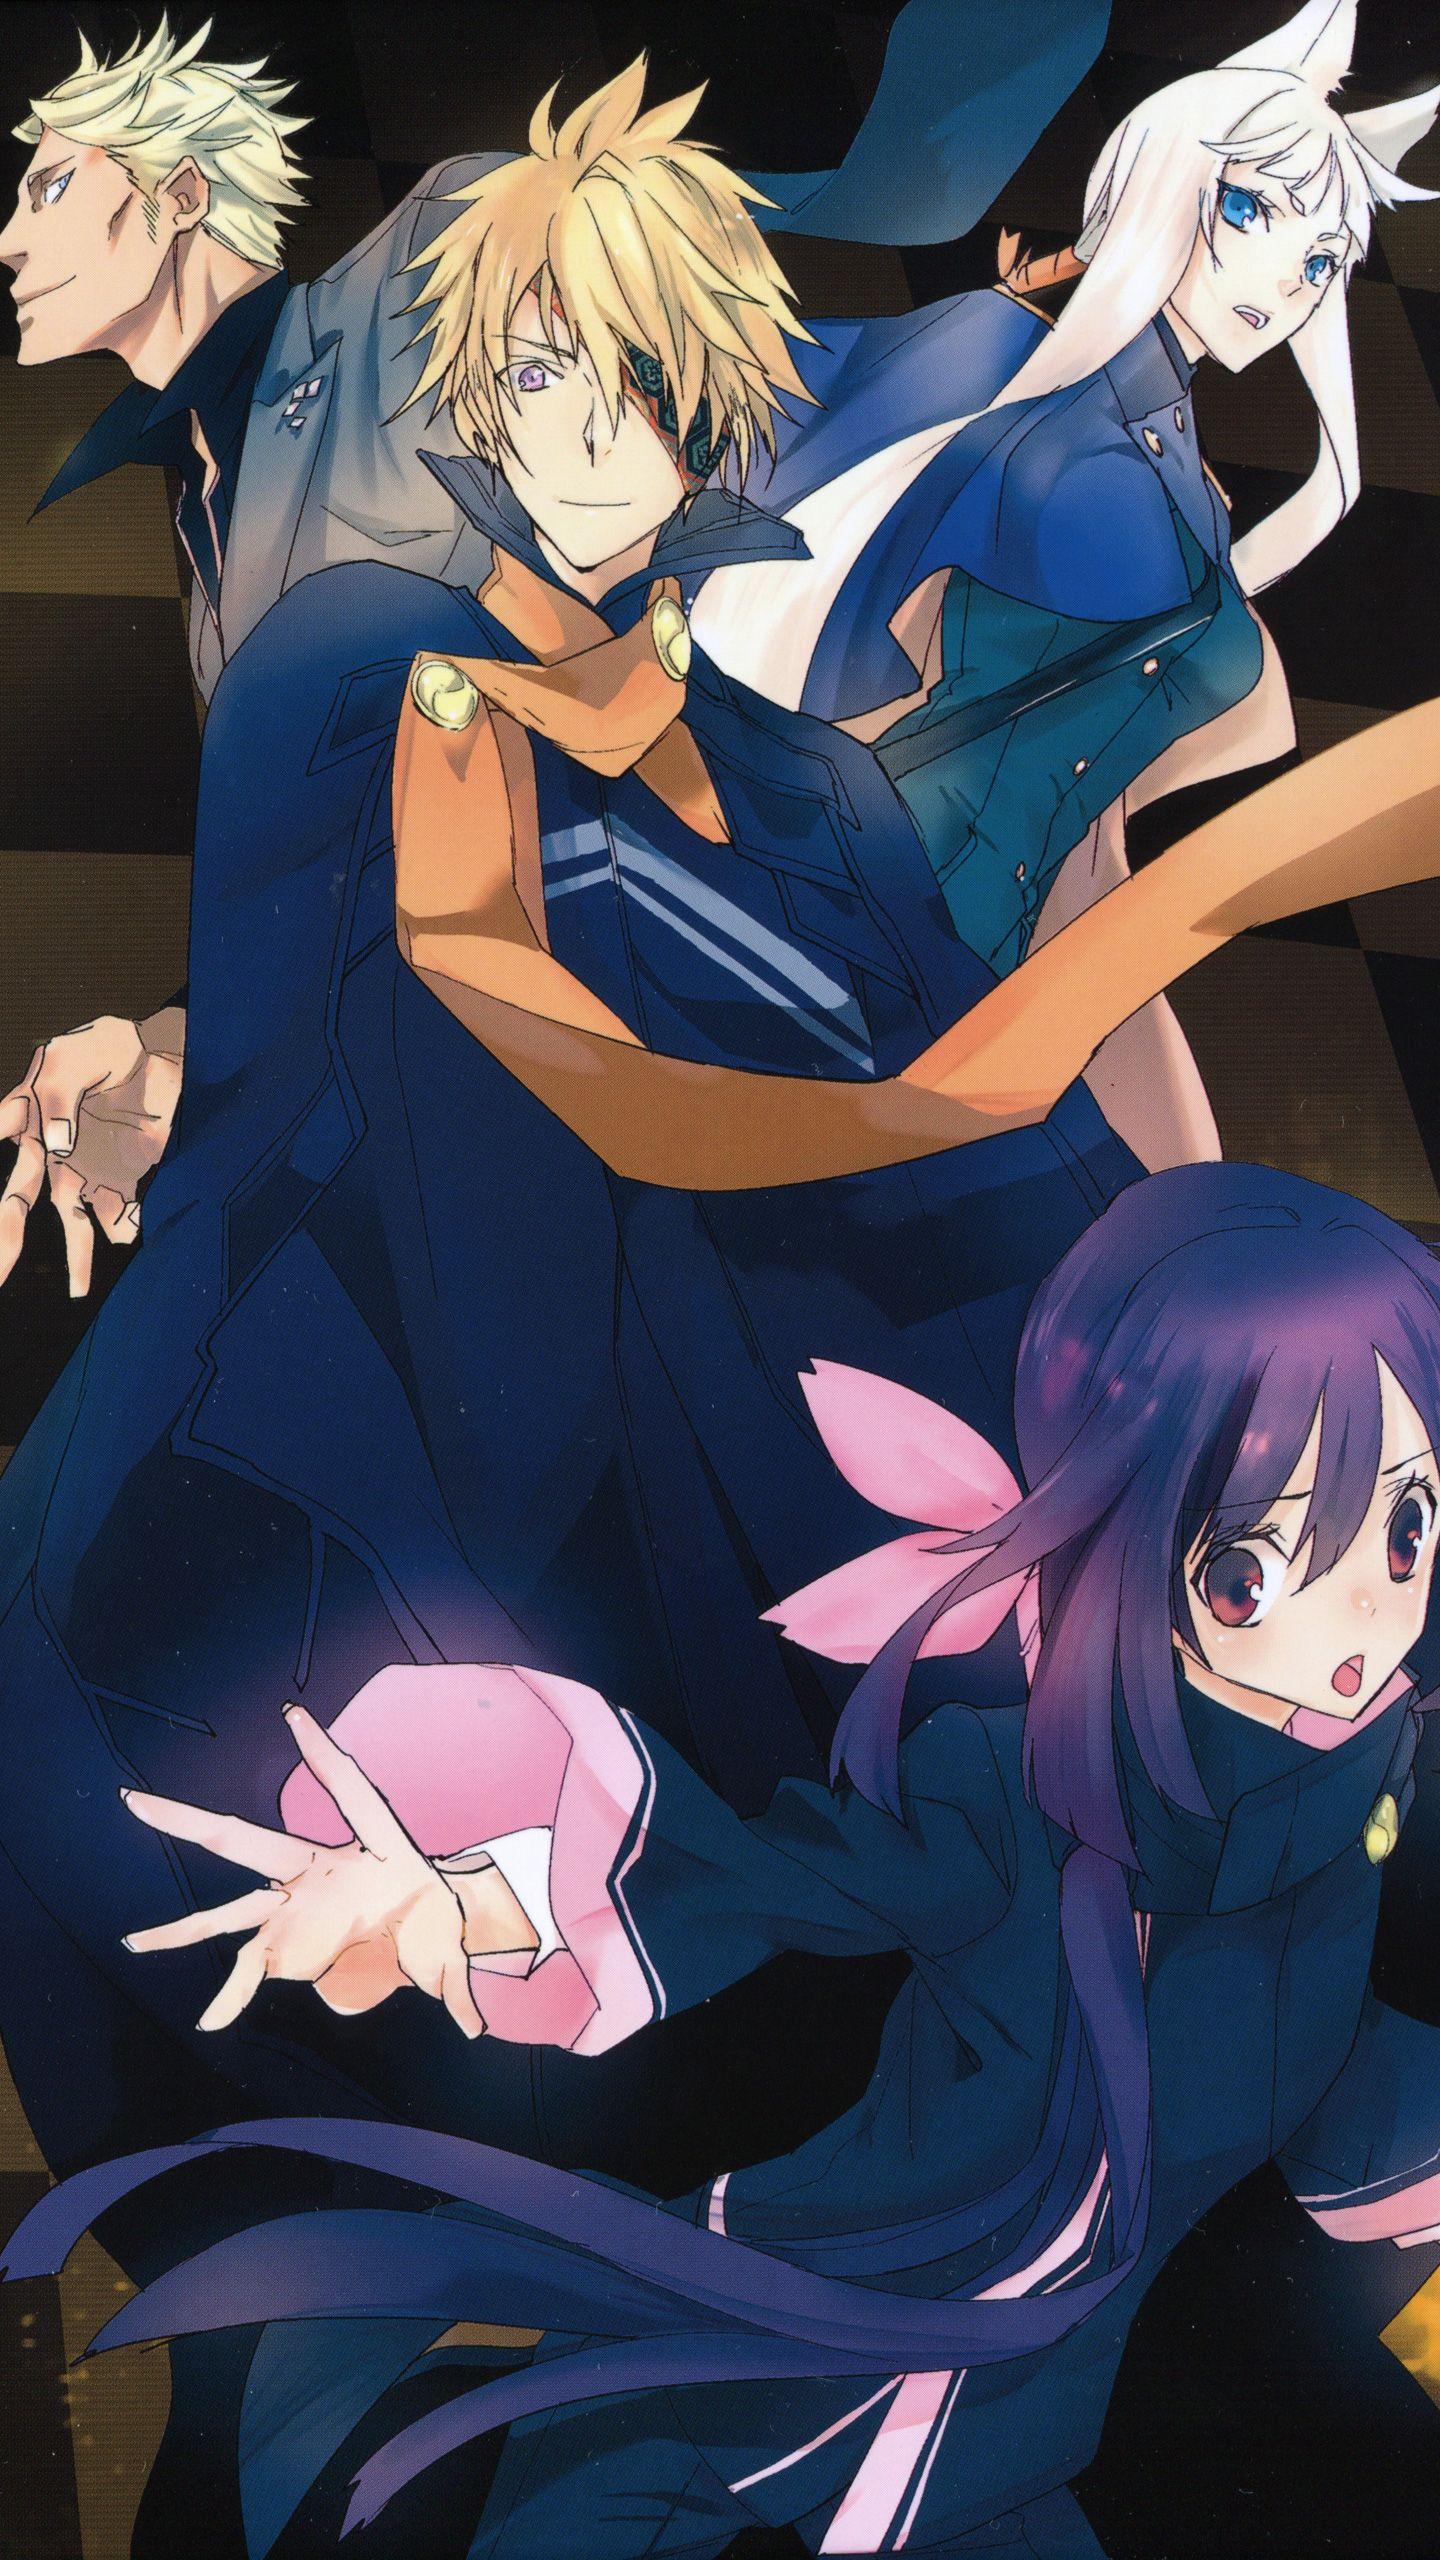 Wallpaper ID 1606995  Anime 720P Tokyo Ravens free download